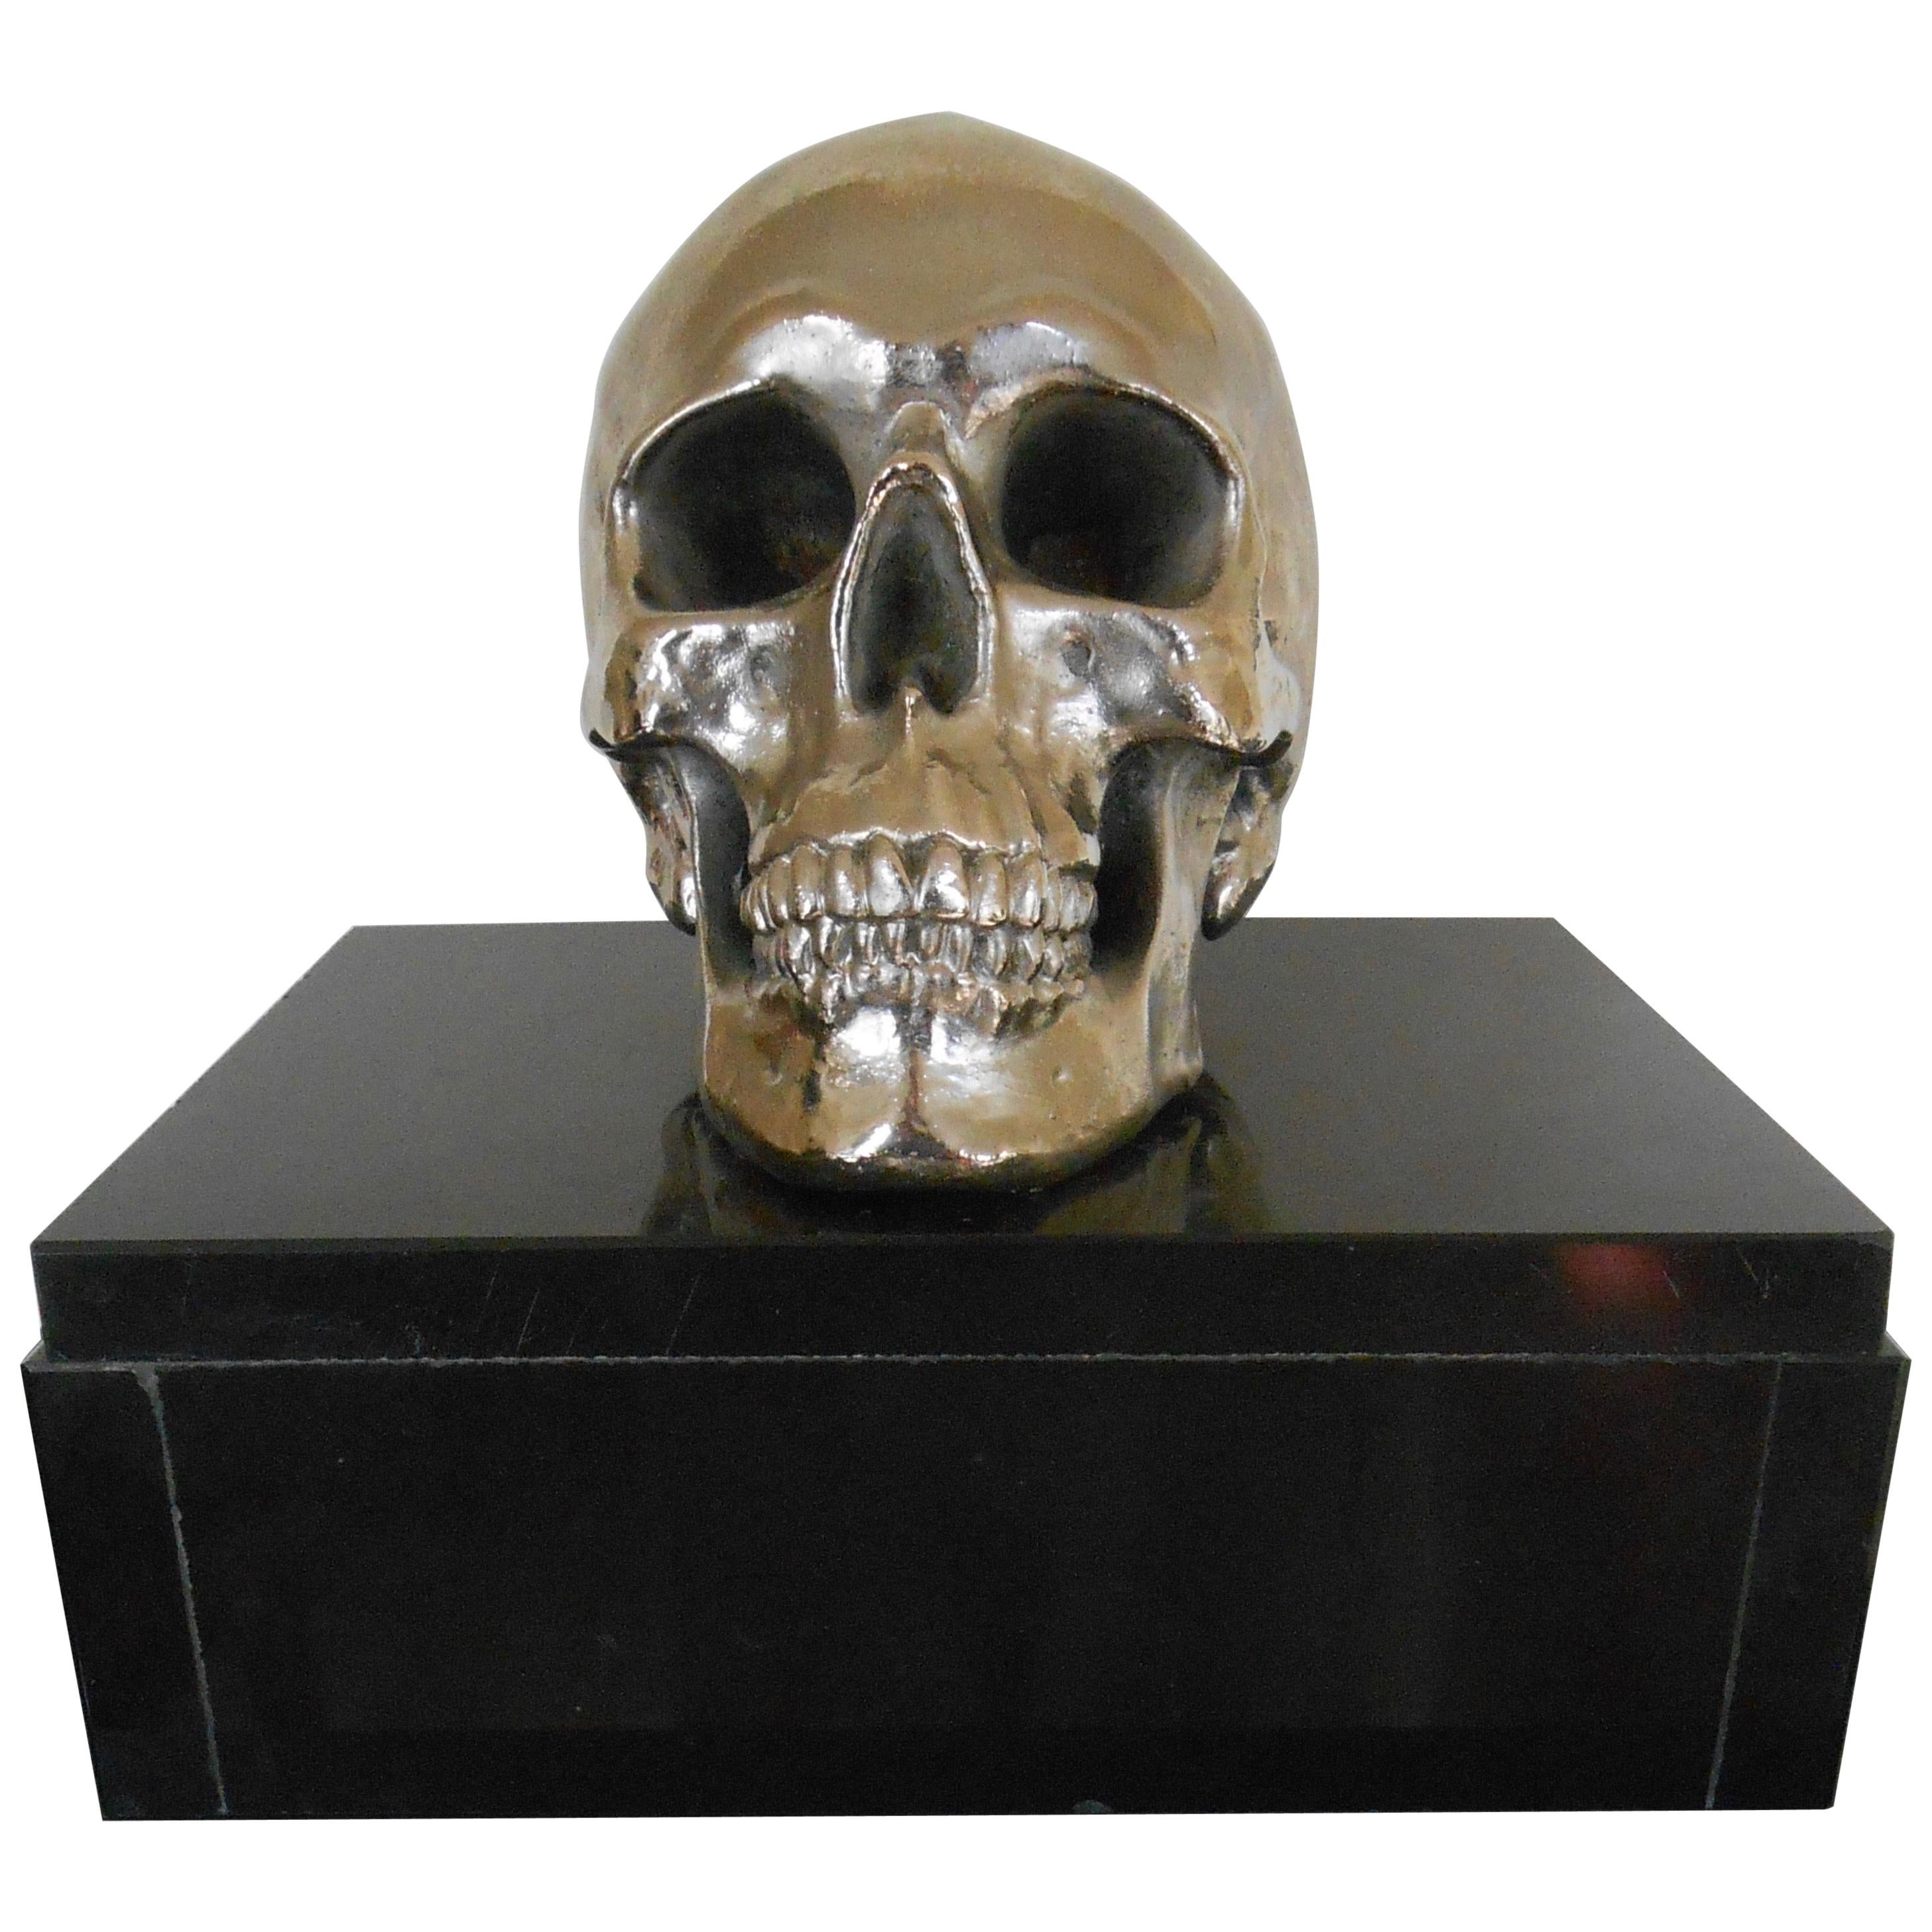 Massive Nickeled Resin Skull Signed Y.D., Belgium, 1989 For Sale